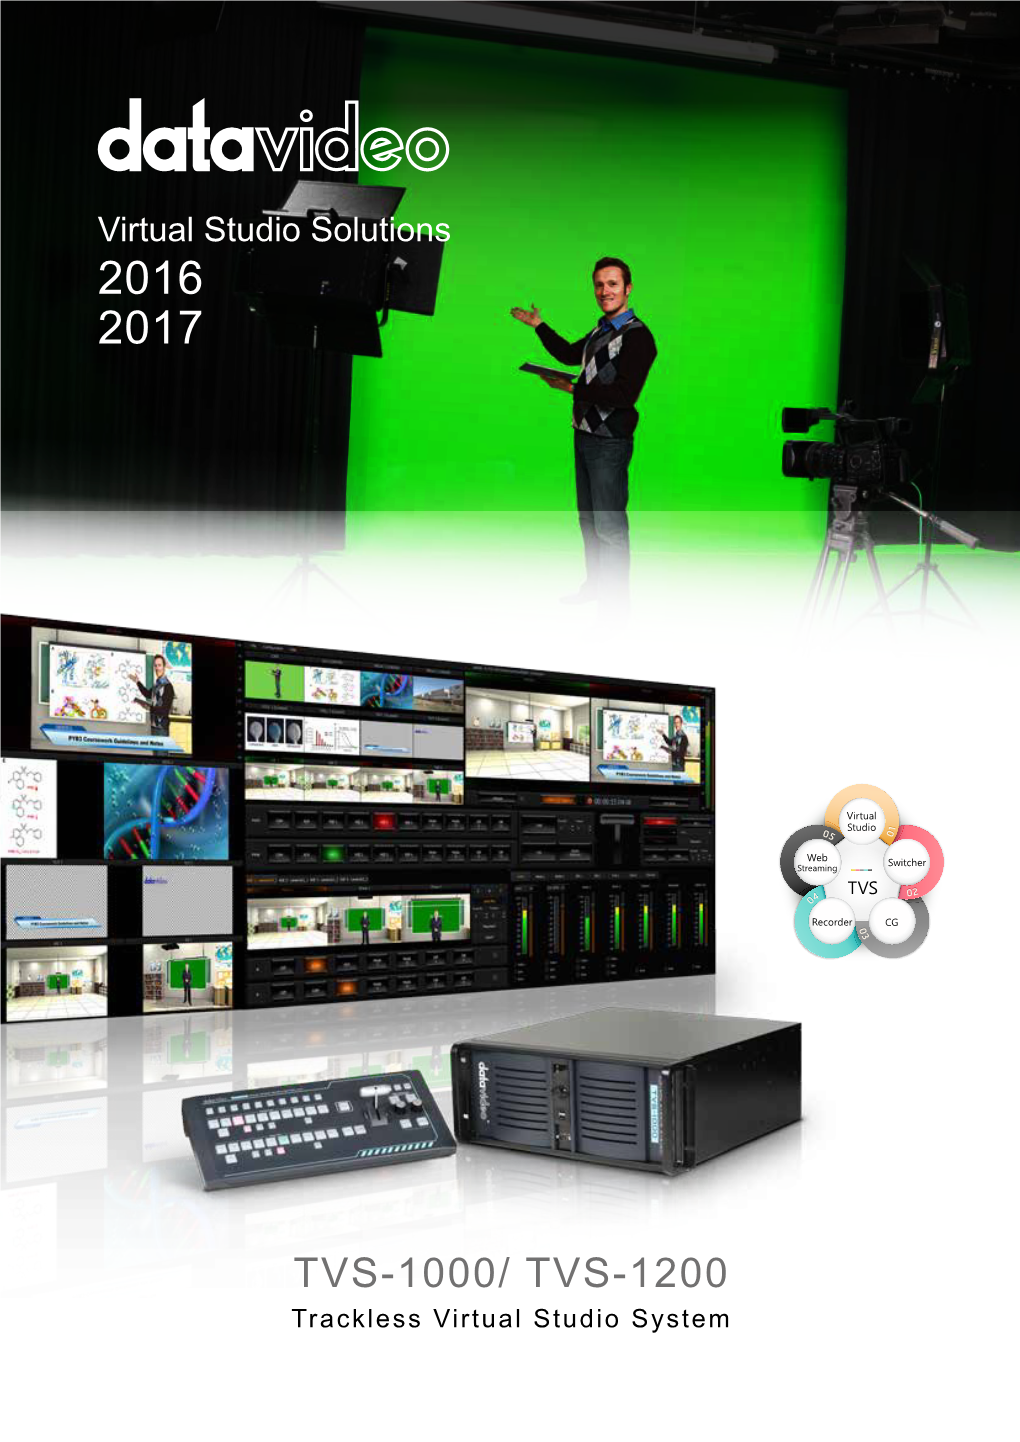 TVS-1000/ TVS-1200 Trackless Virtual Studio System 2 3 TVS-1000 TVS-1200 Product Video Product Video